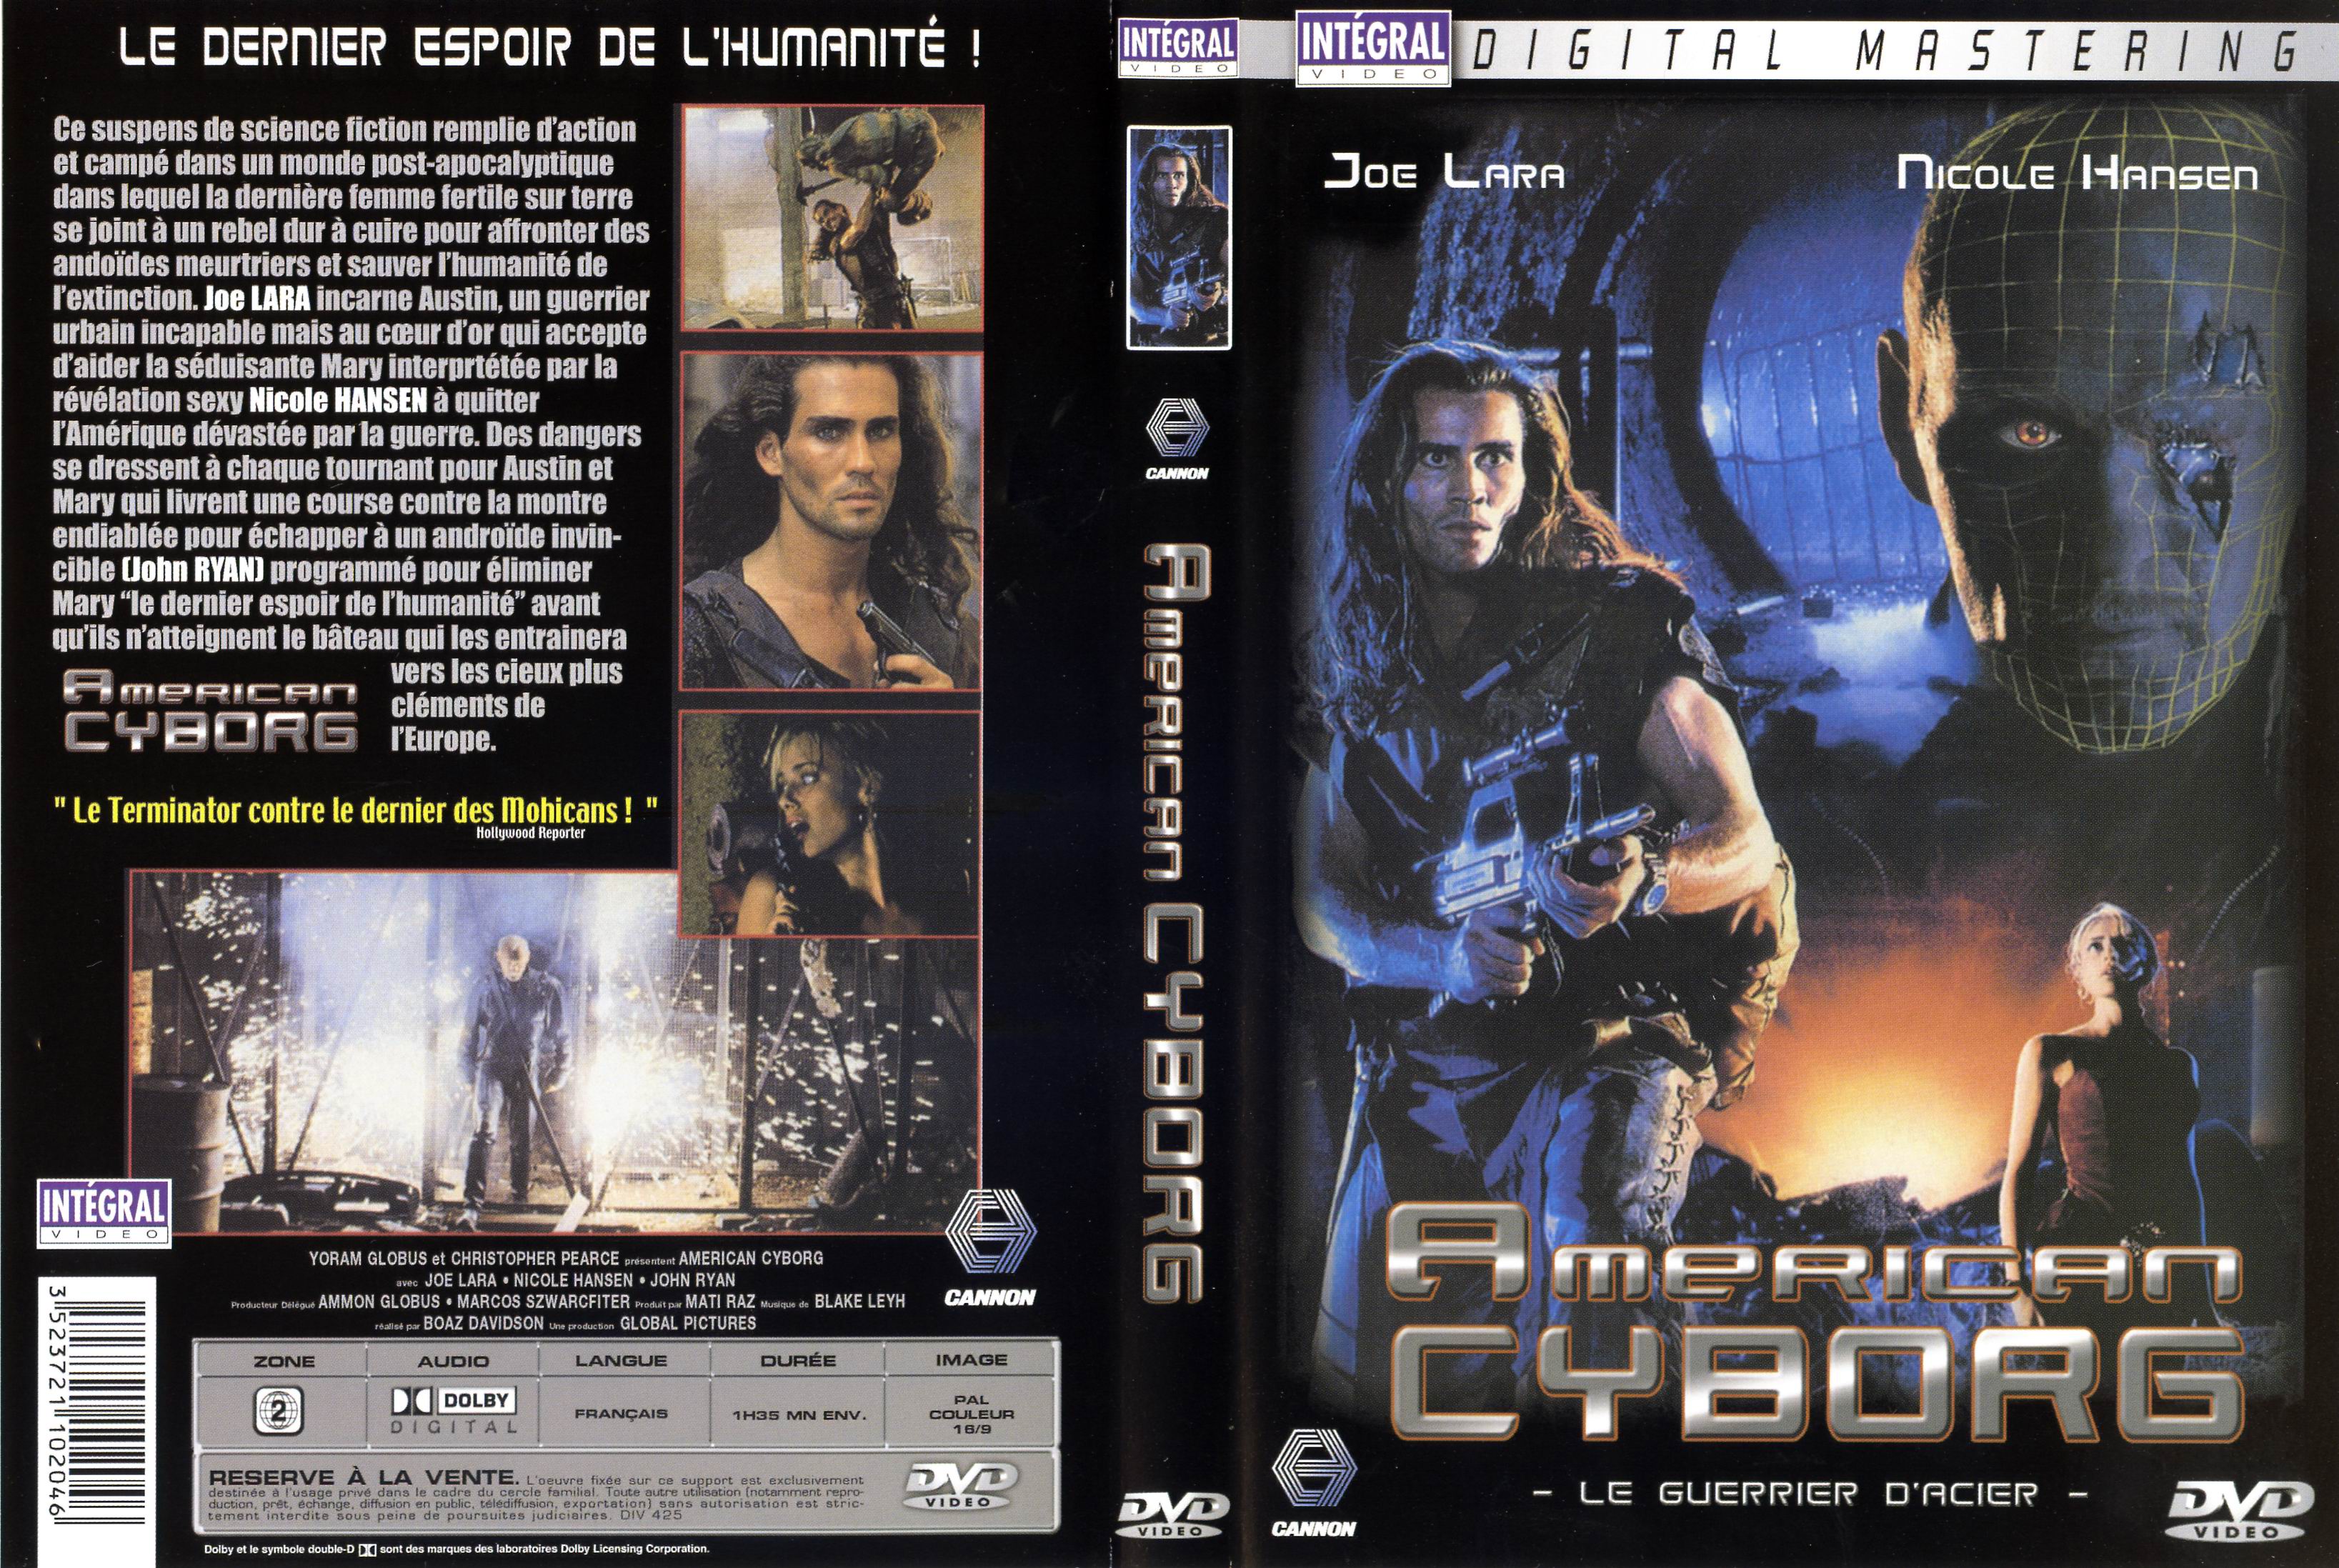 Jaquette DVD American cyborg